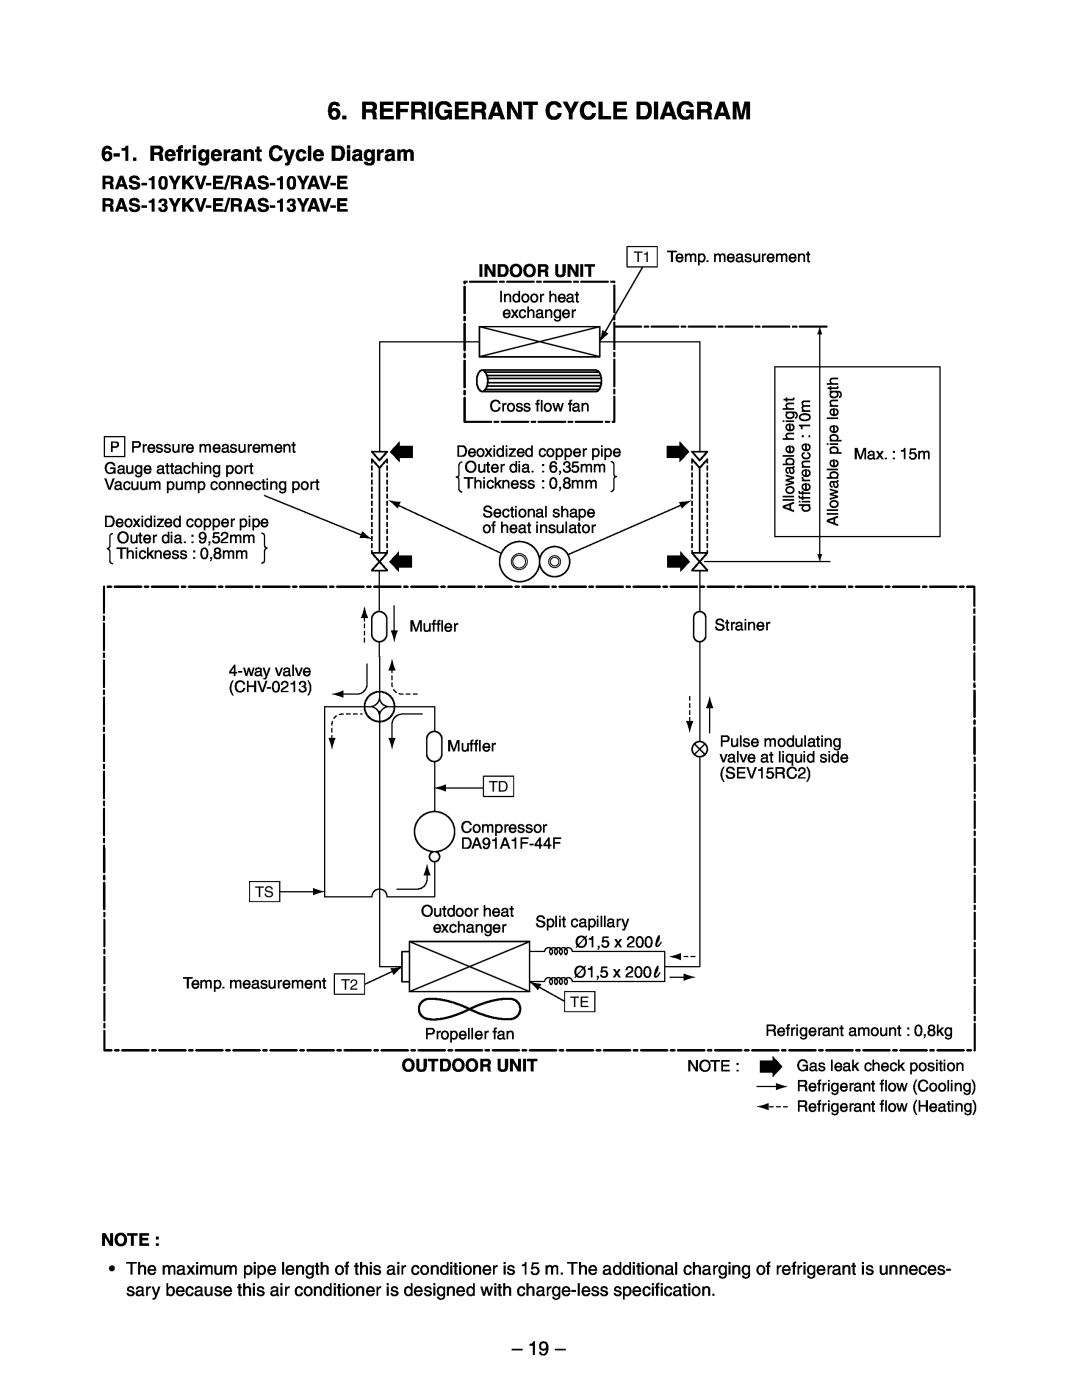 Toshiba service manual Refrigerant Cycle Diagram, RAS-10YKV-E/RAS-10YAV-E RAS-13YKV-E/RAS-13YAV-E 